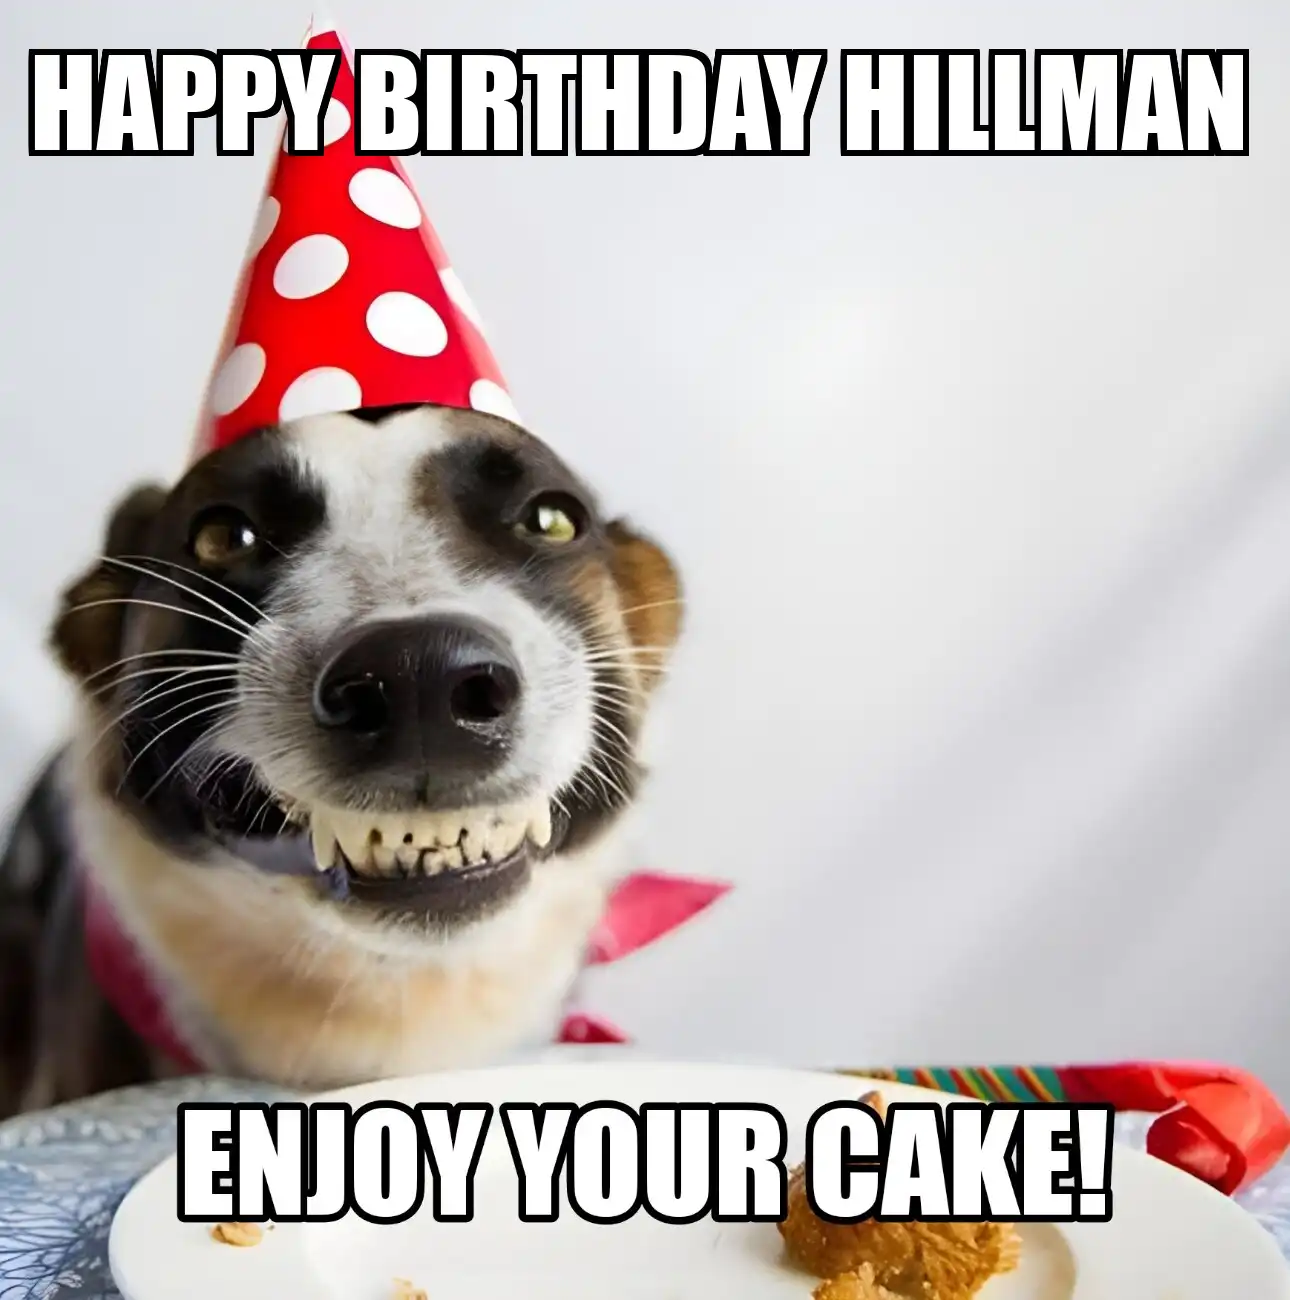 Happy Birthday Hillman Enjoy Your Cake Dog Meme